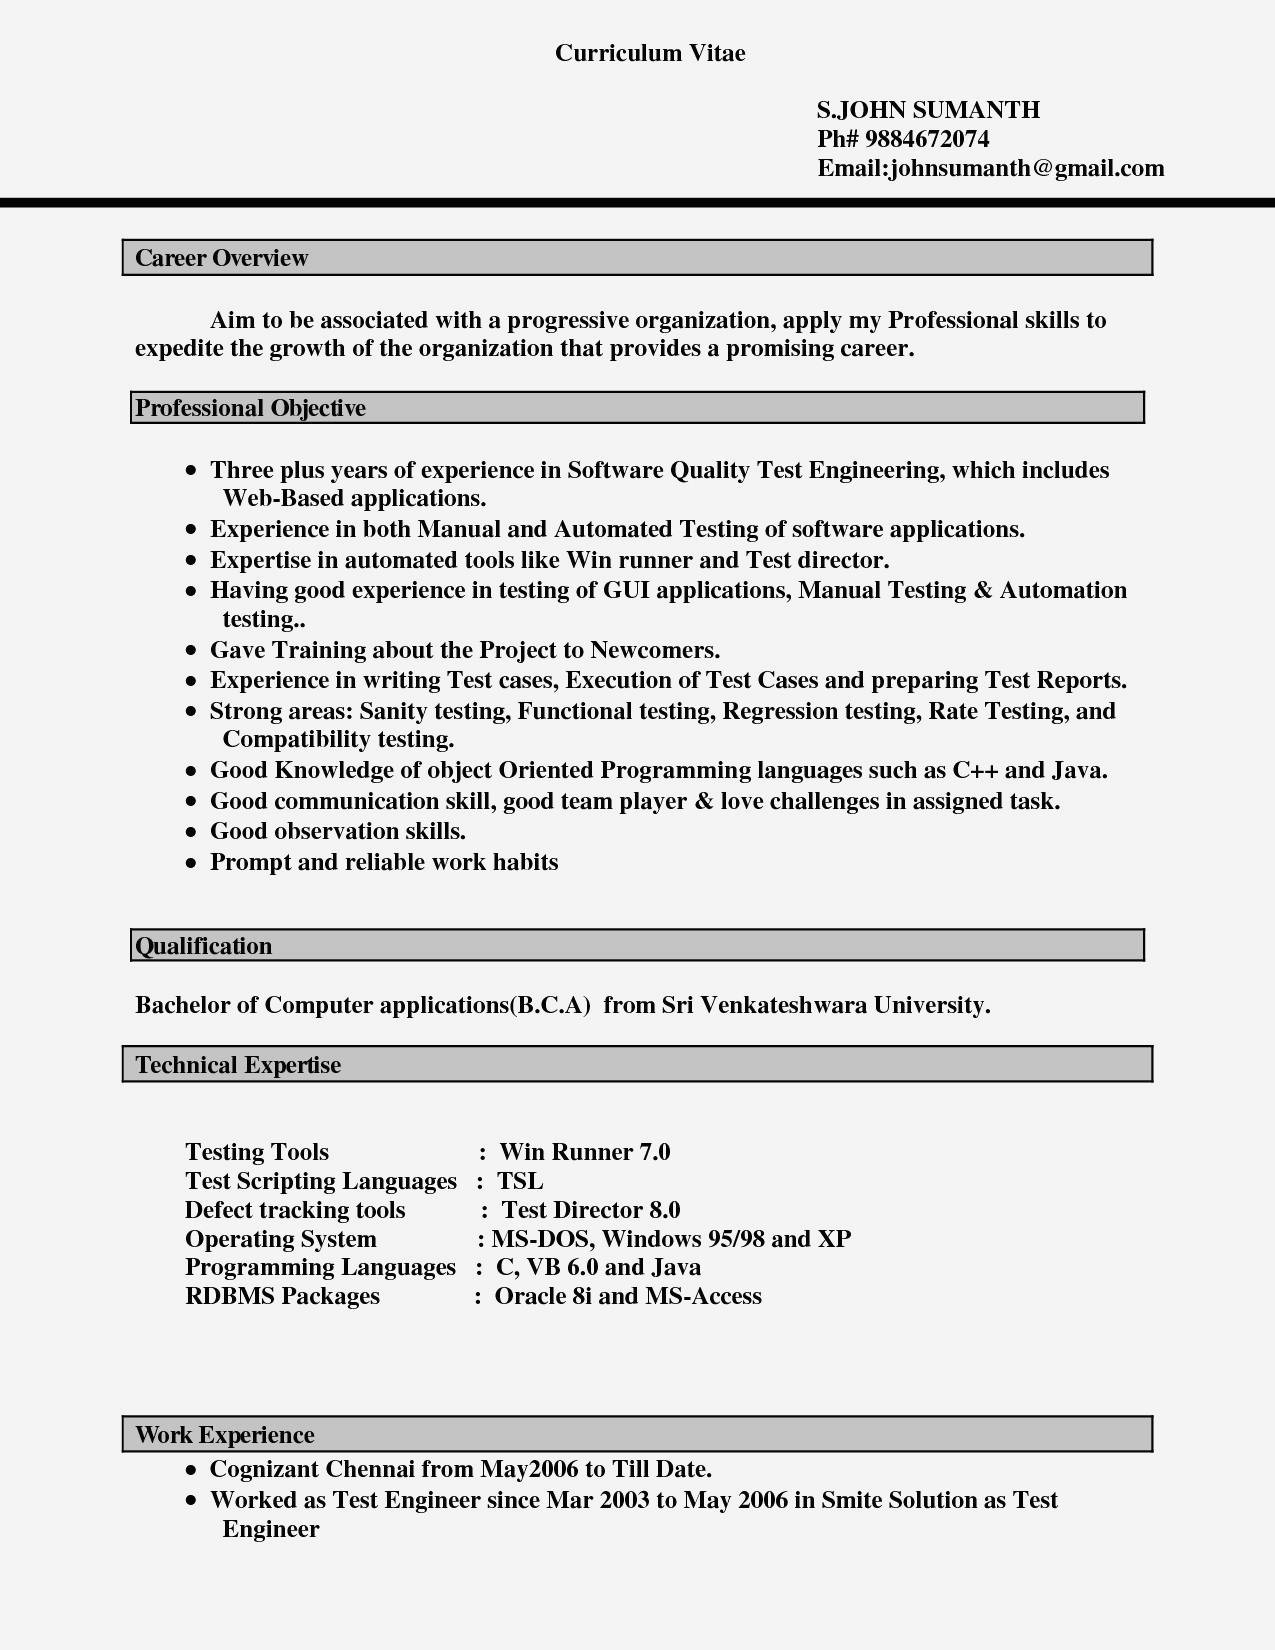 Resume Template Microsoft Word Free Elegant New Printable Resume - Free Printable Resume Templates Microsoft Word